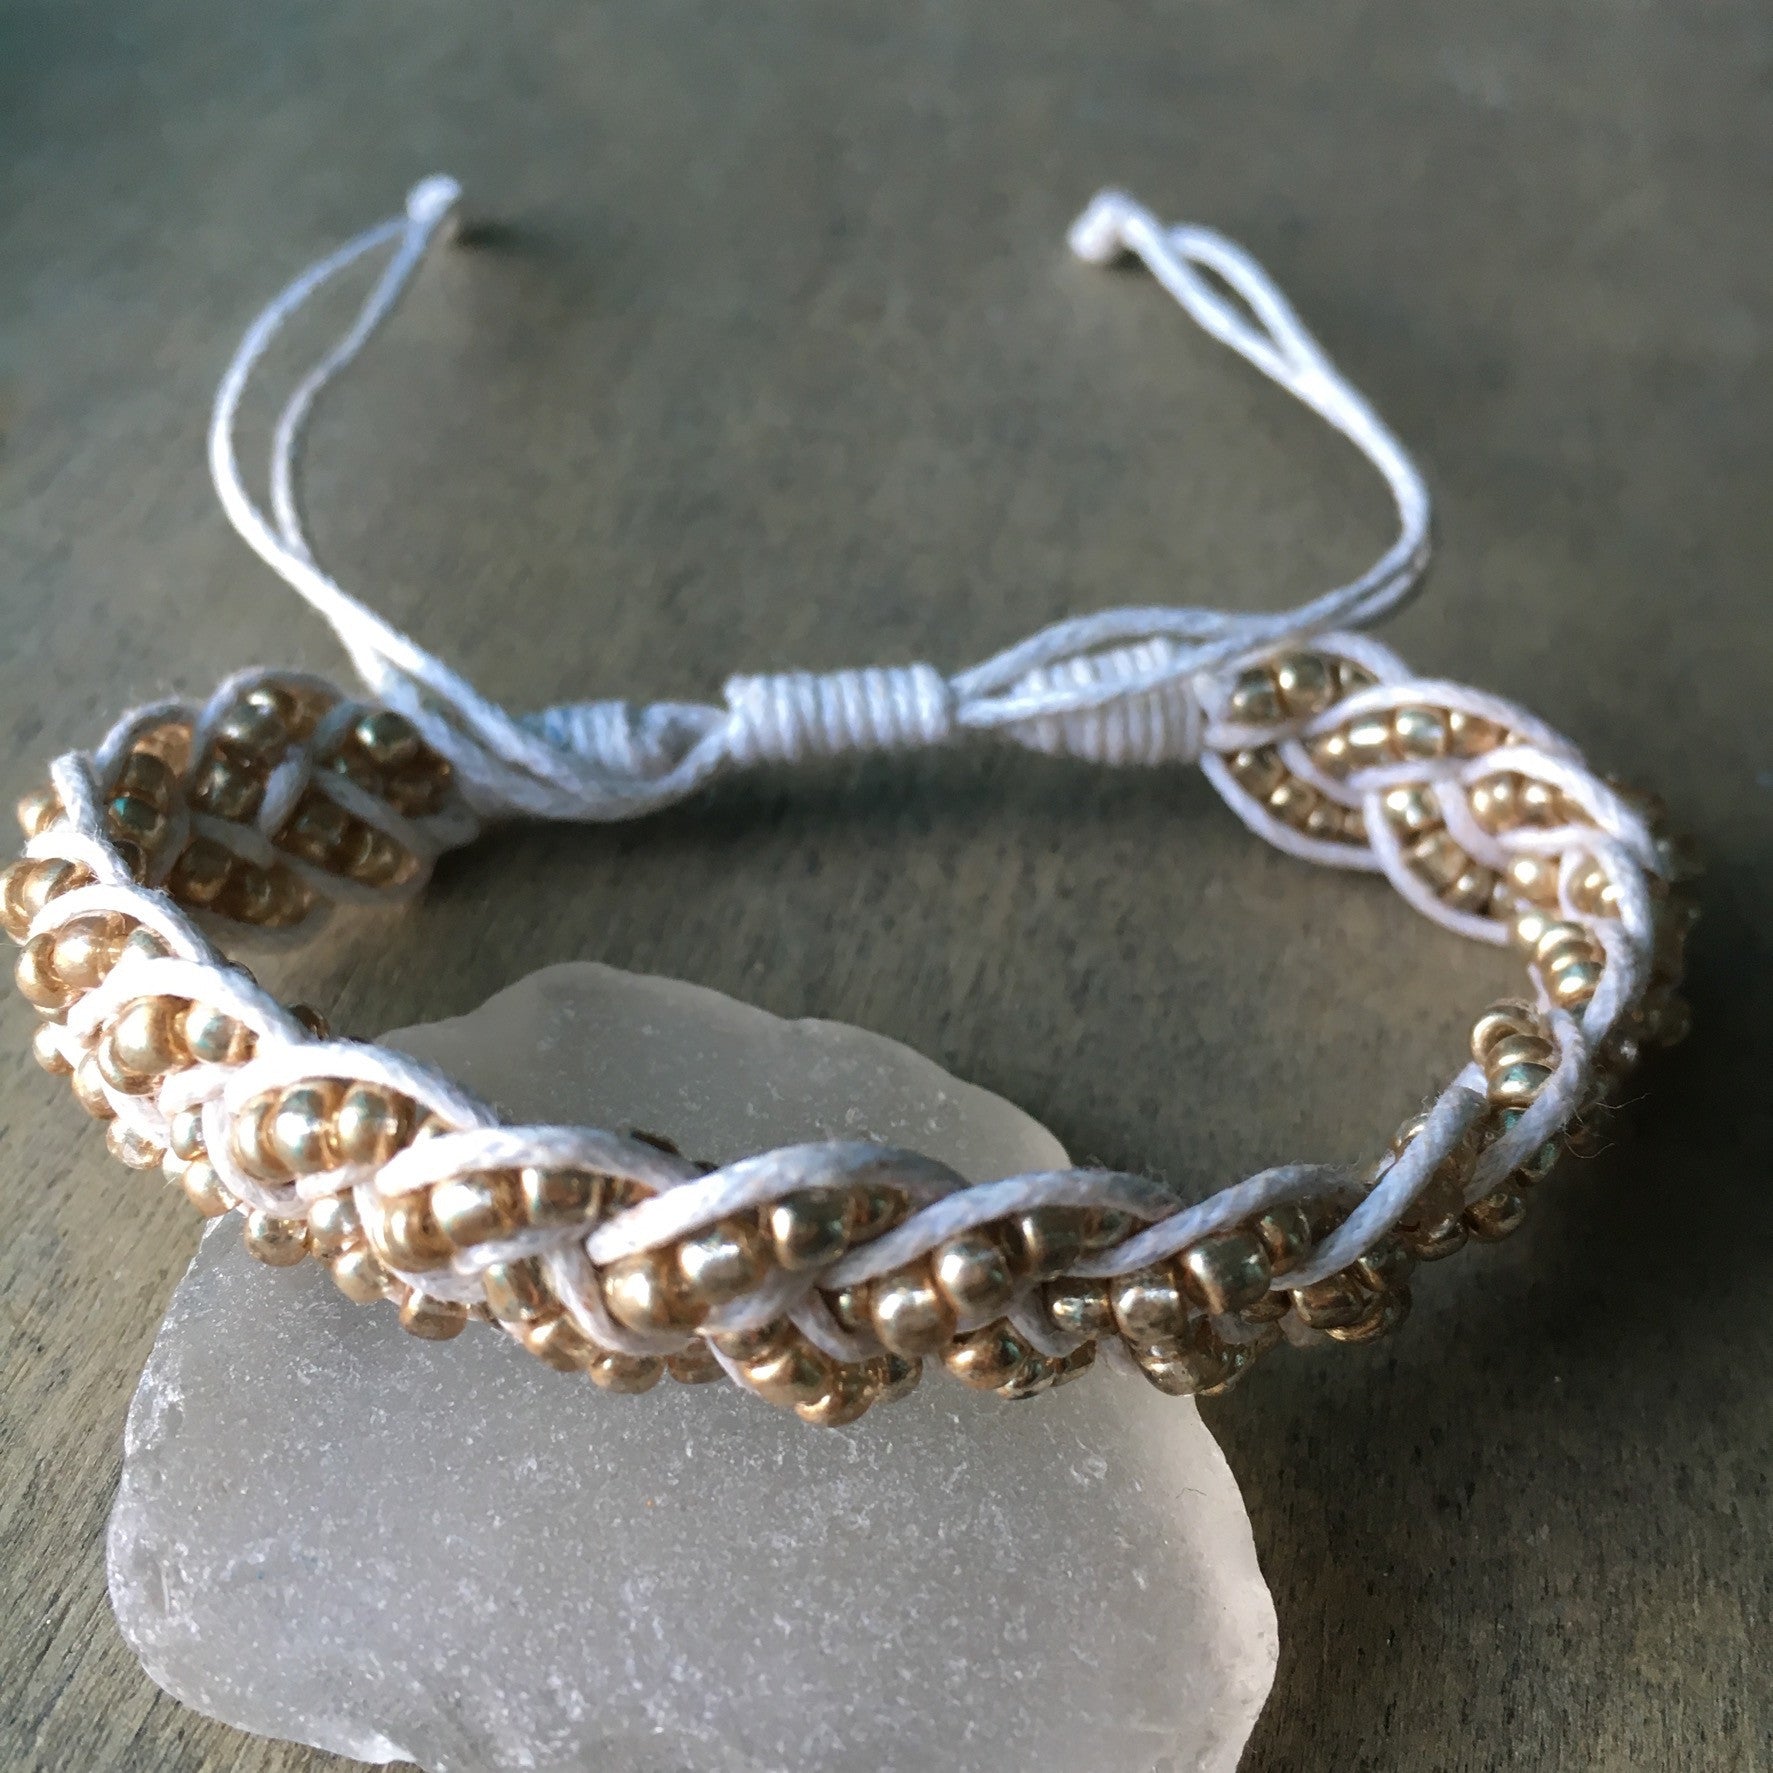 bracelet made of rope